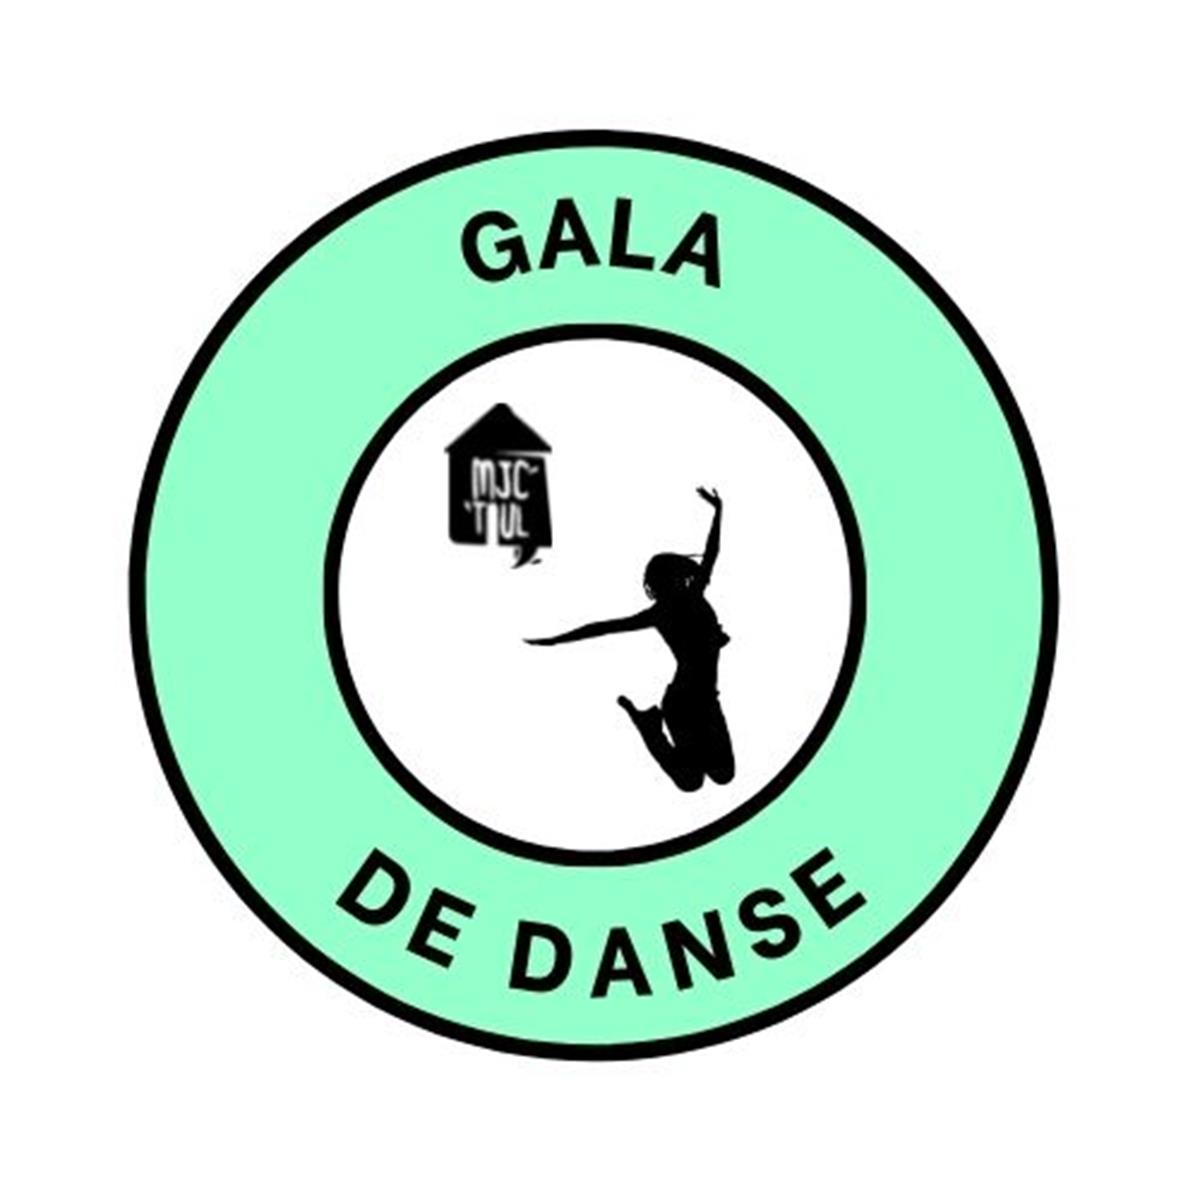 GALA DE DANSES - MJC TOUL